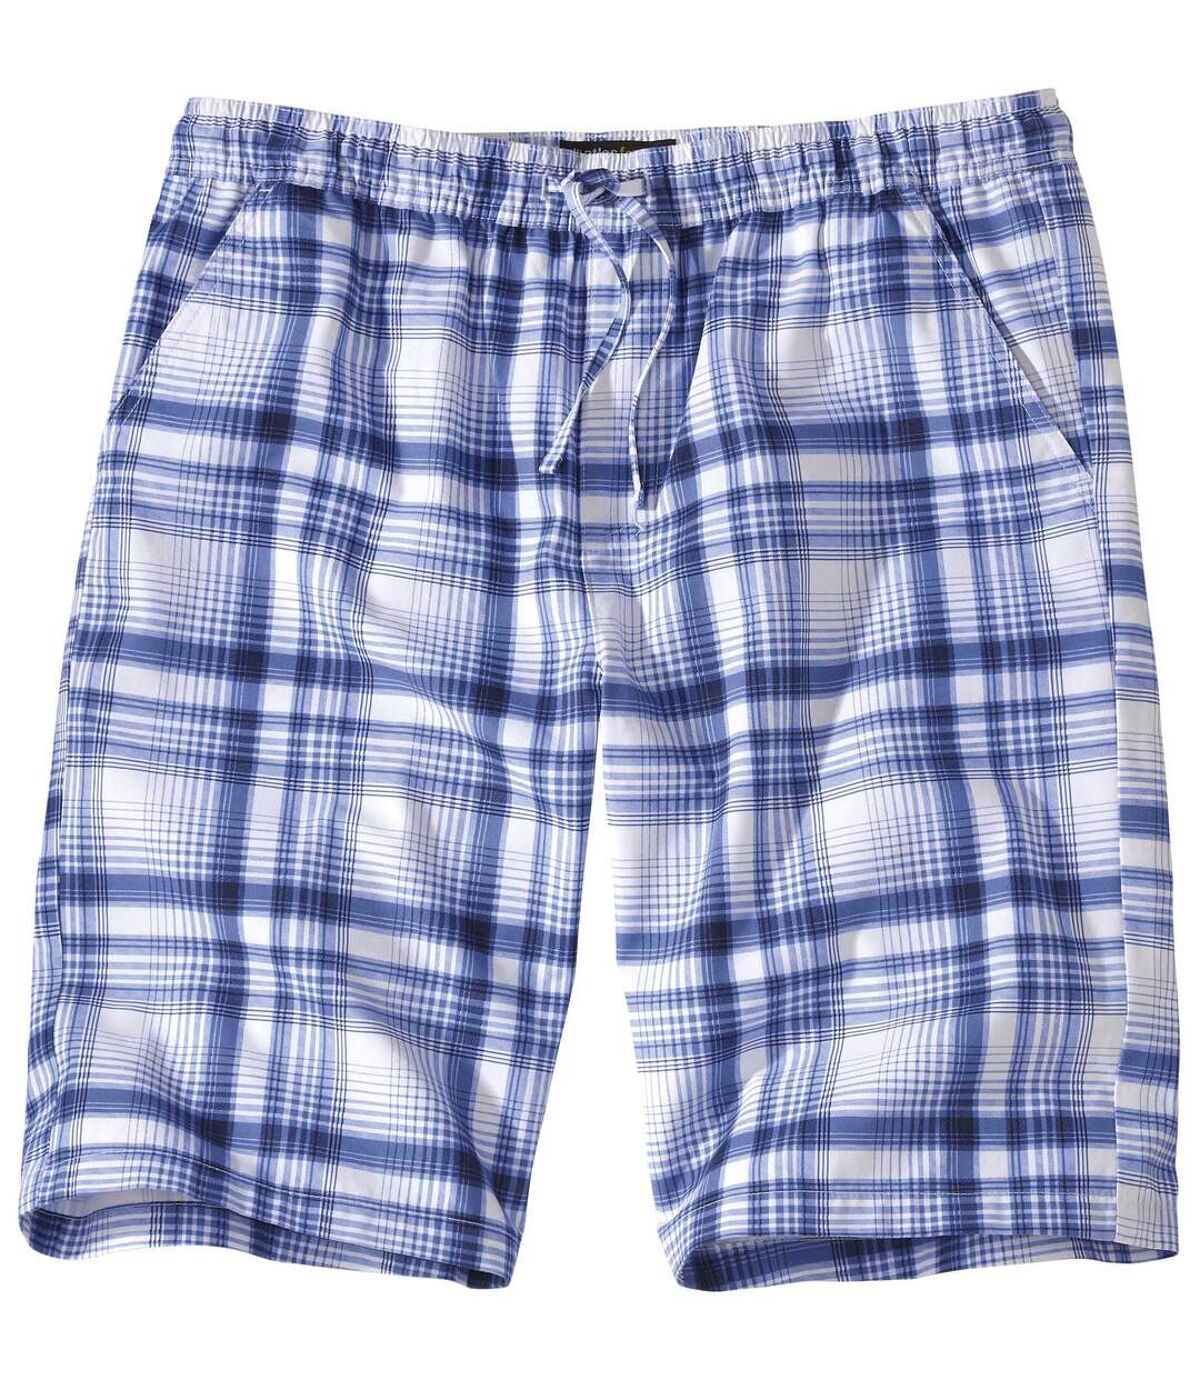 Men's Checked Shorts - White and Blue Atlas For Men